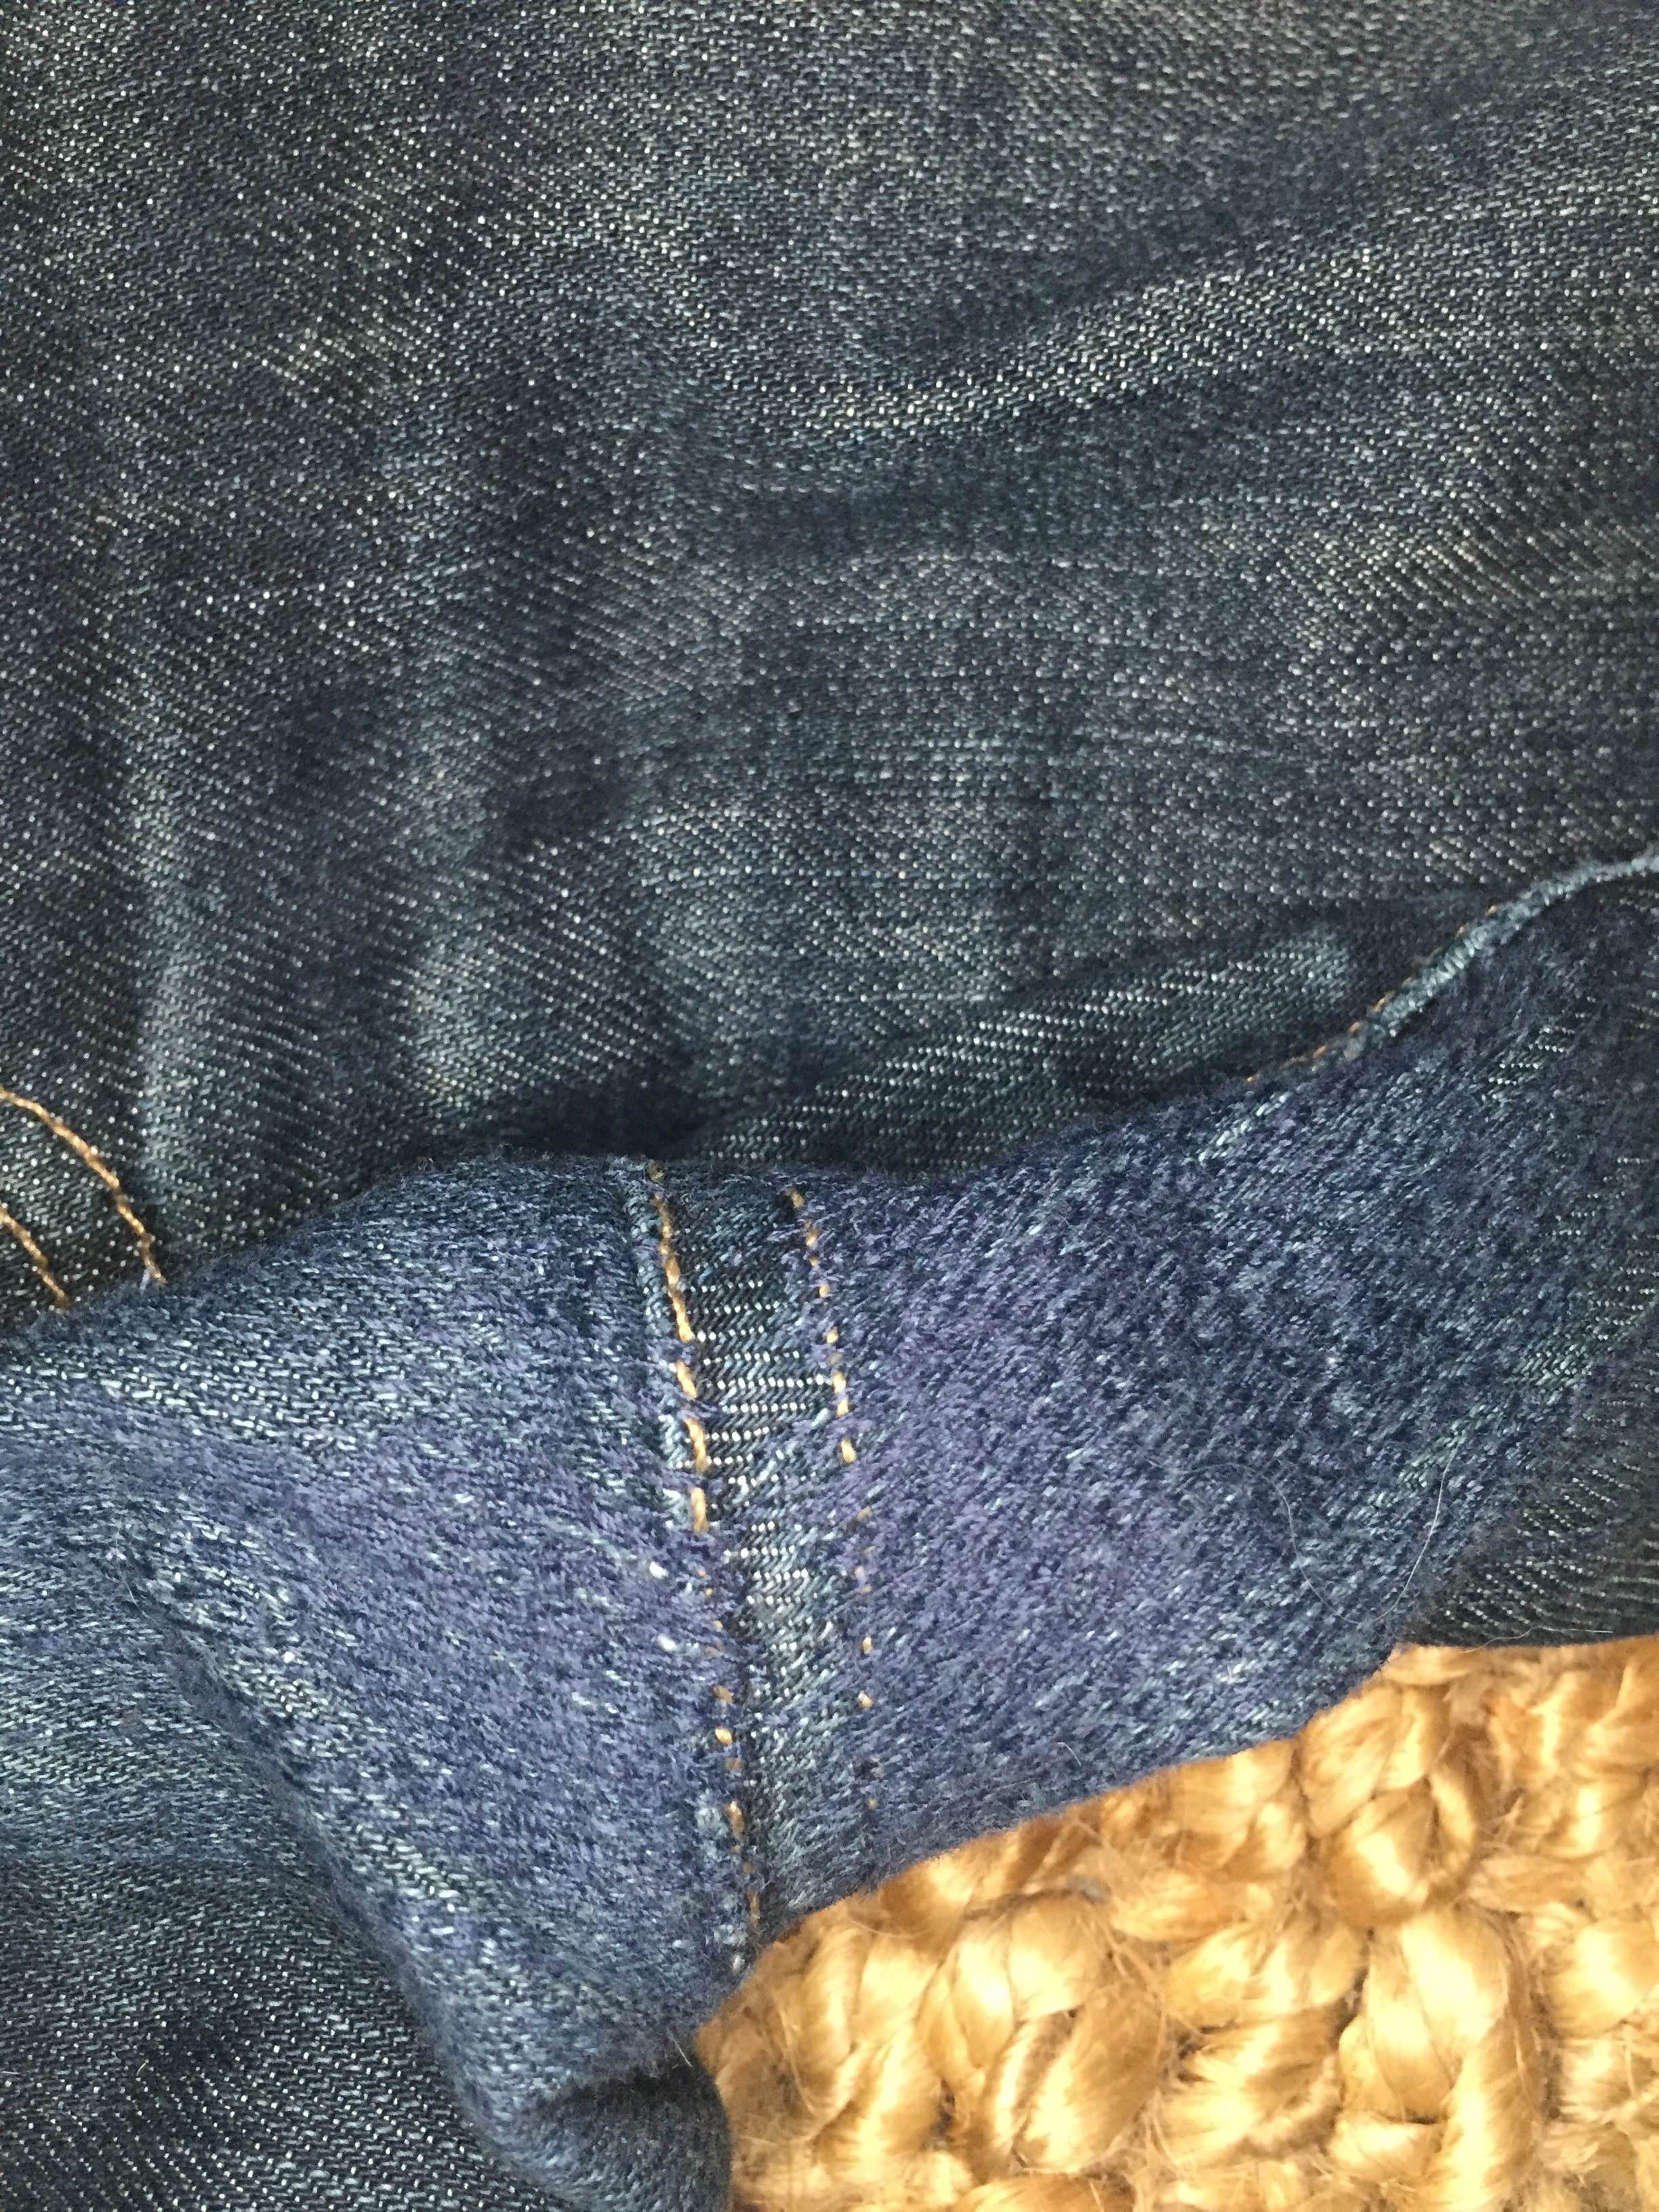 Repaired jeans exterior